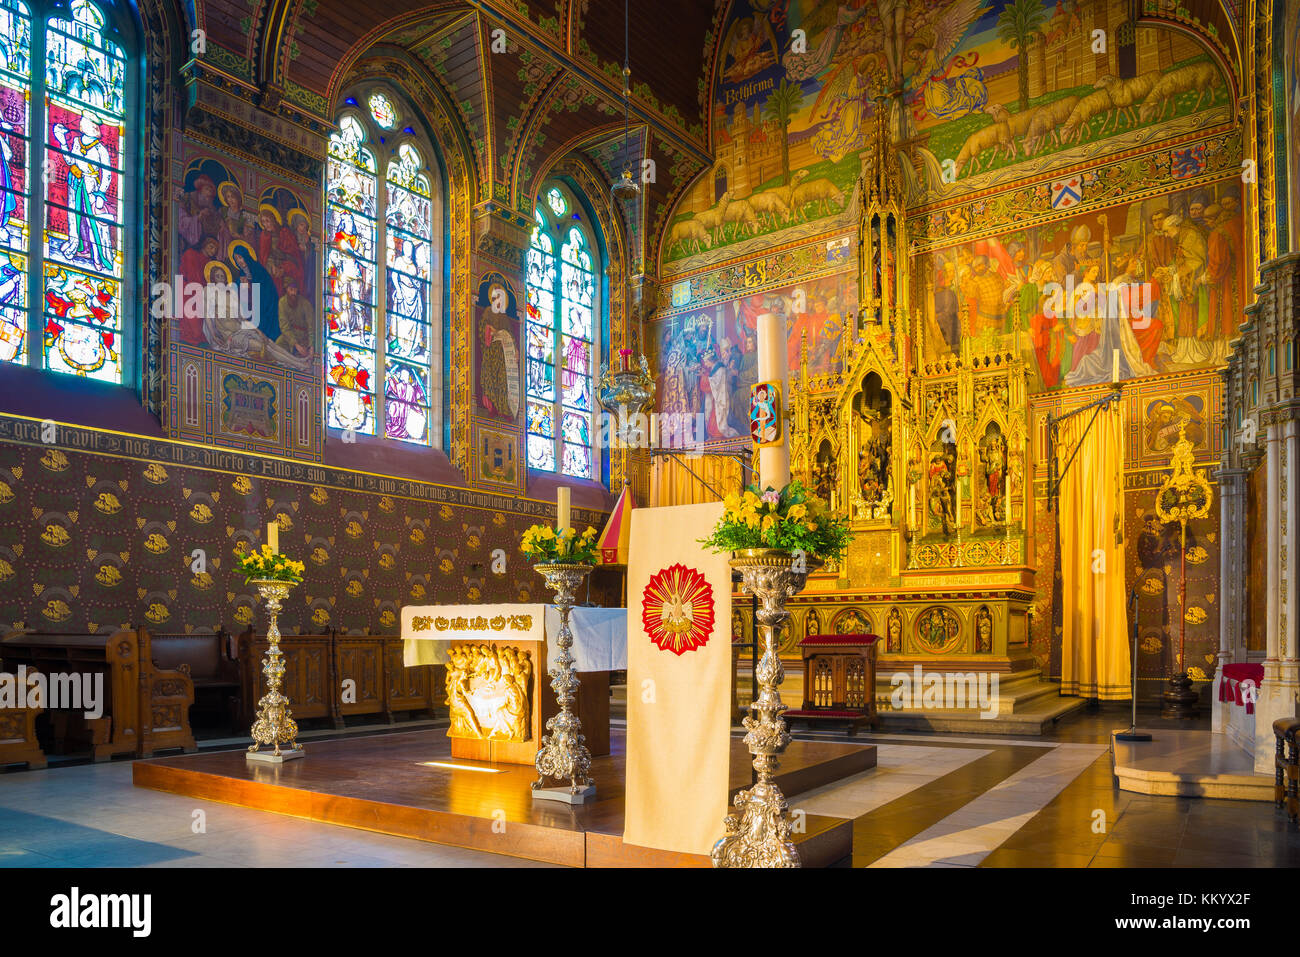 Bruges, Belgium - April 18, 2017: Interior of the Basilica of the Holy Blood - Basiliek van het Heilig Bloed Stock Photo